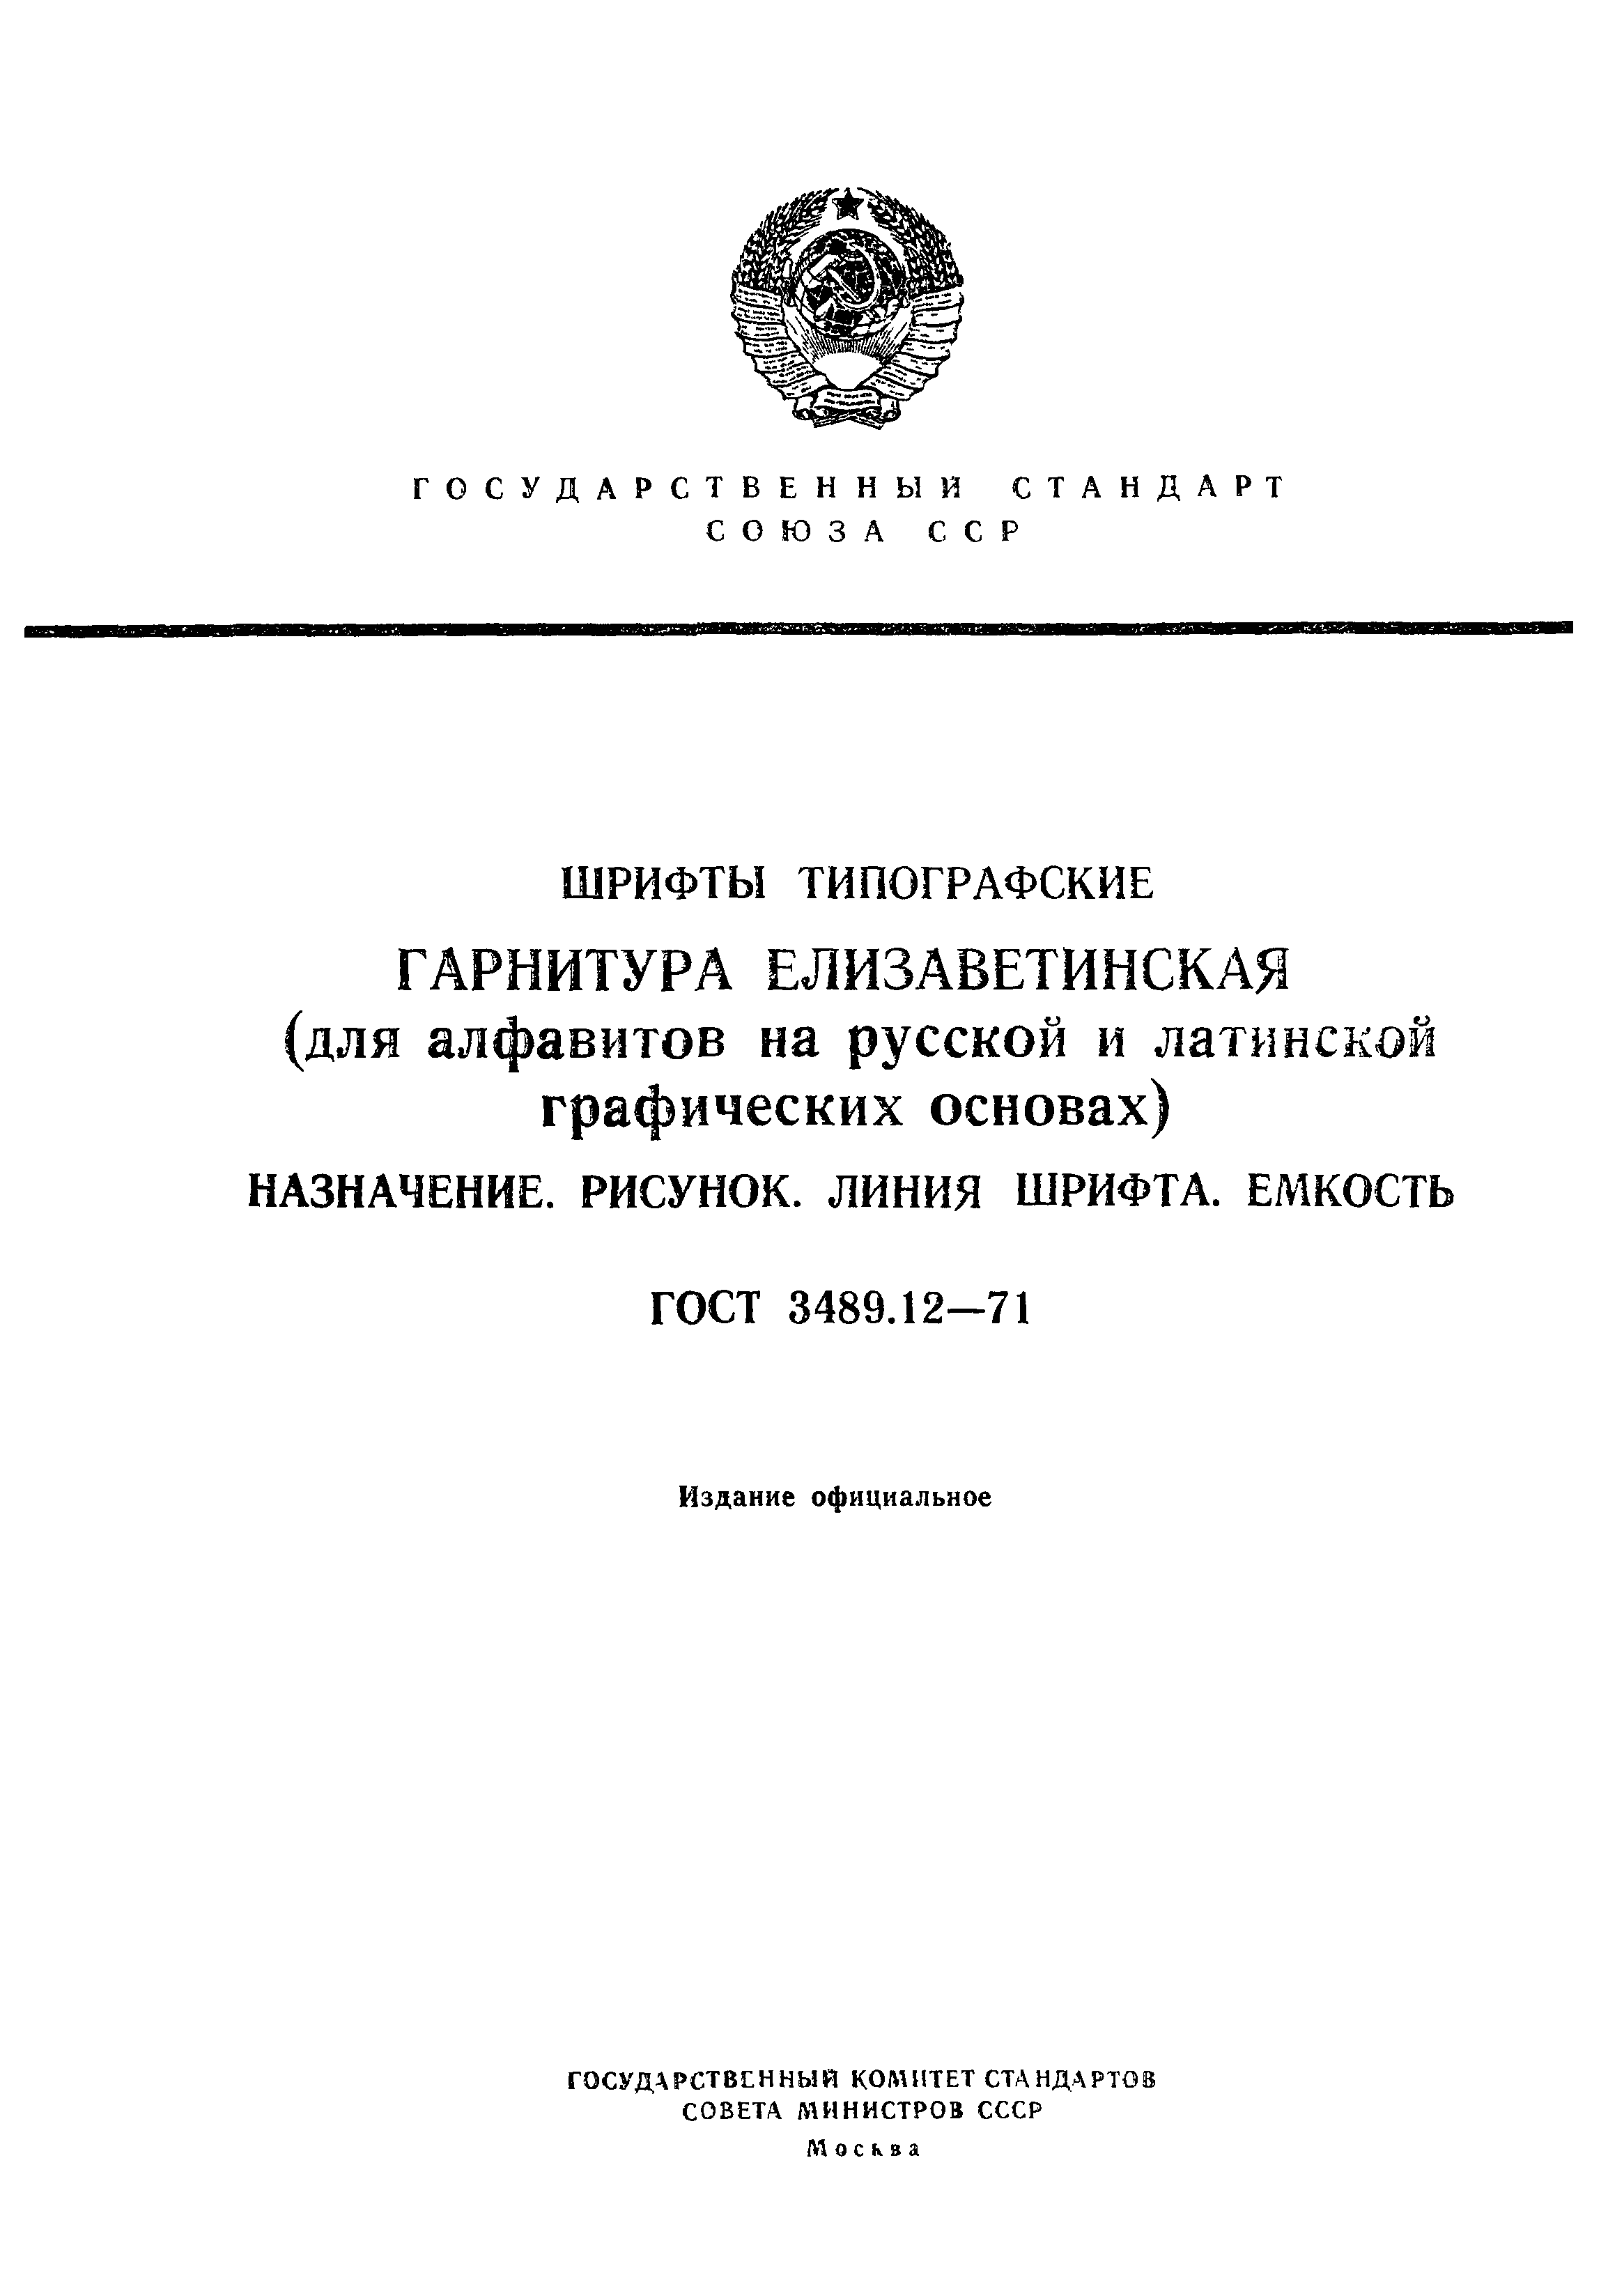 ГОСТ 3489.12-71